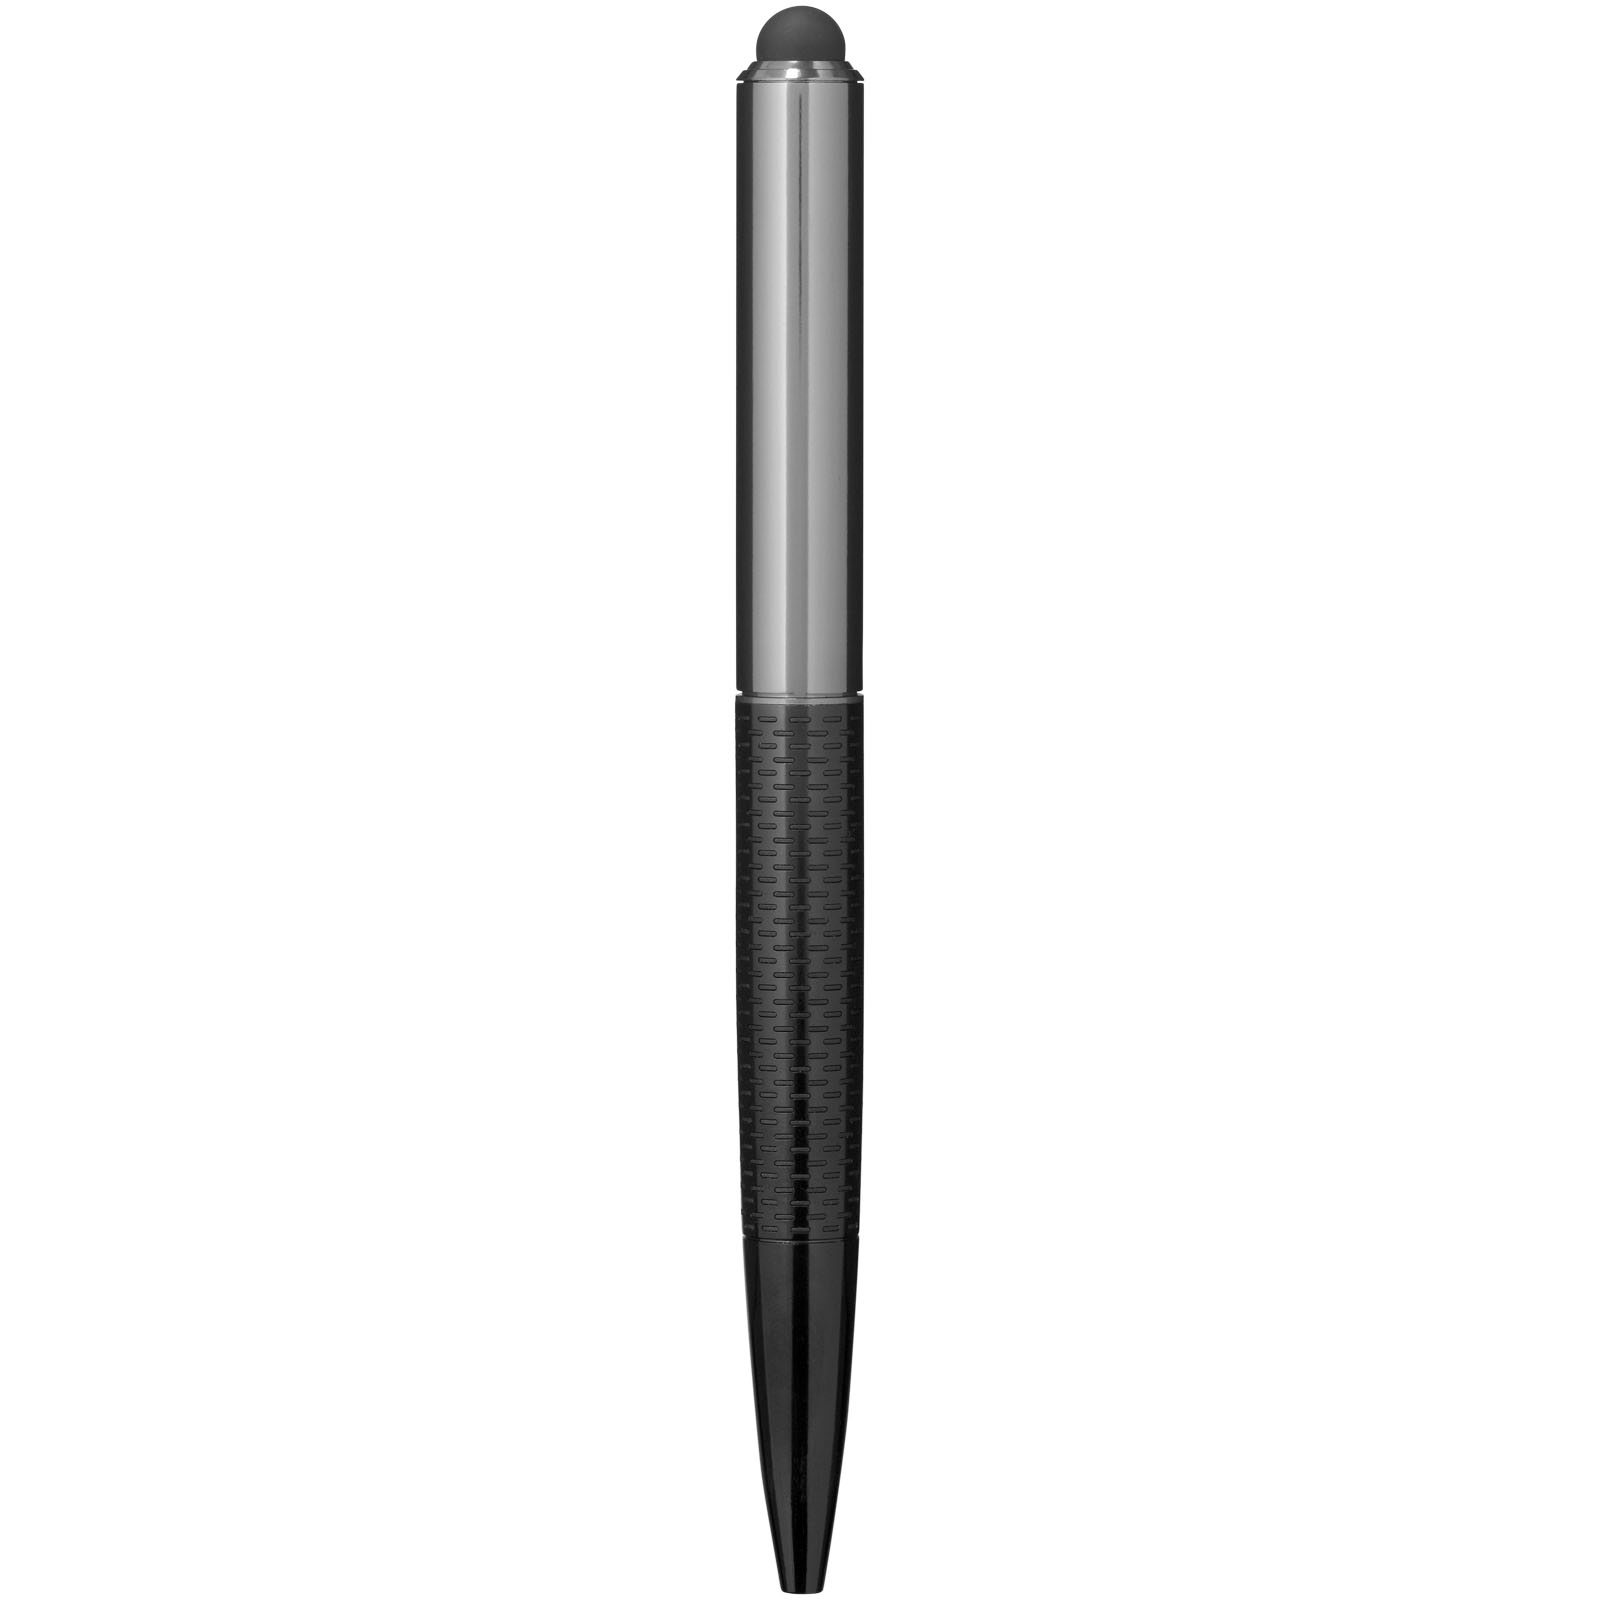 Advertising Ballpoint Pens - Dash stylus ballpoint pen - 3